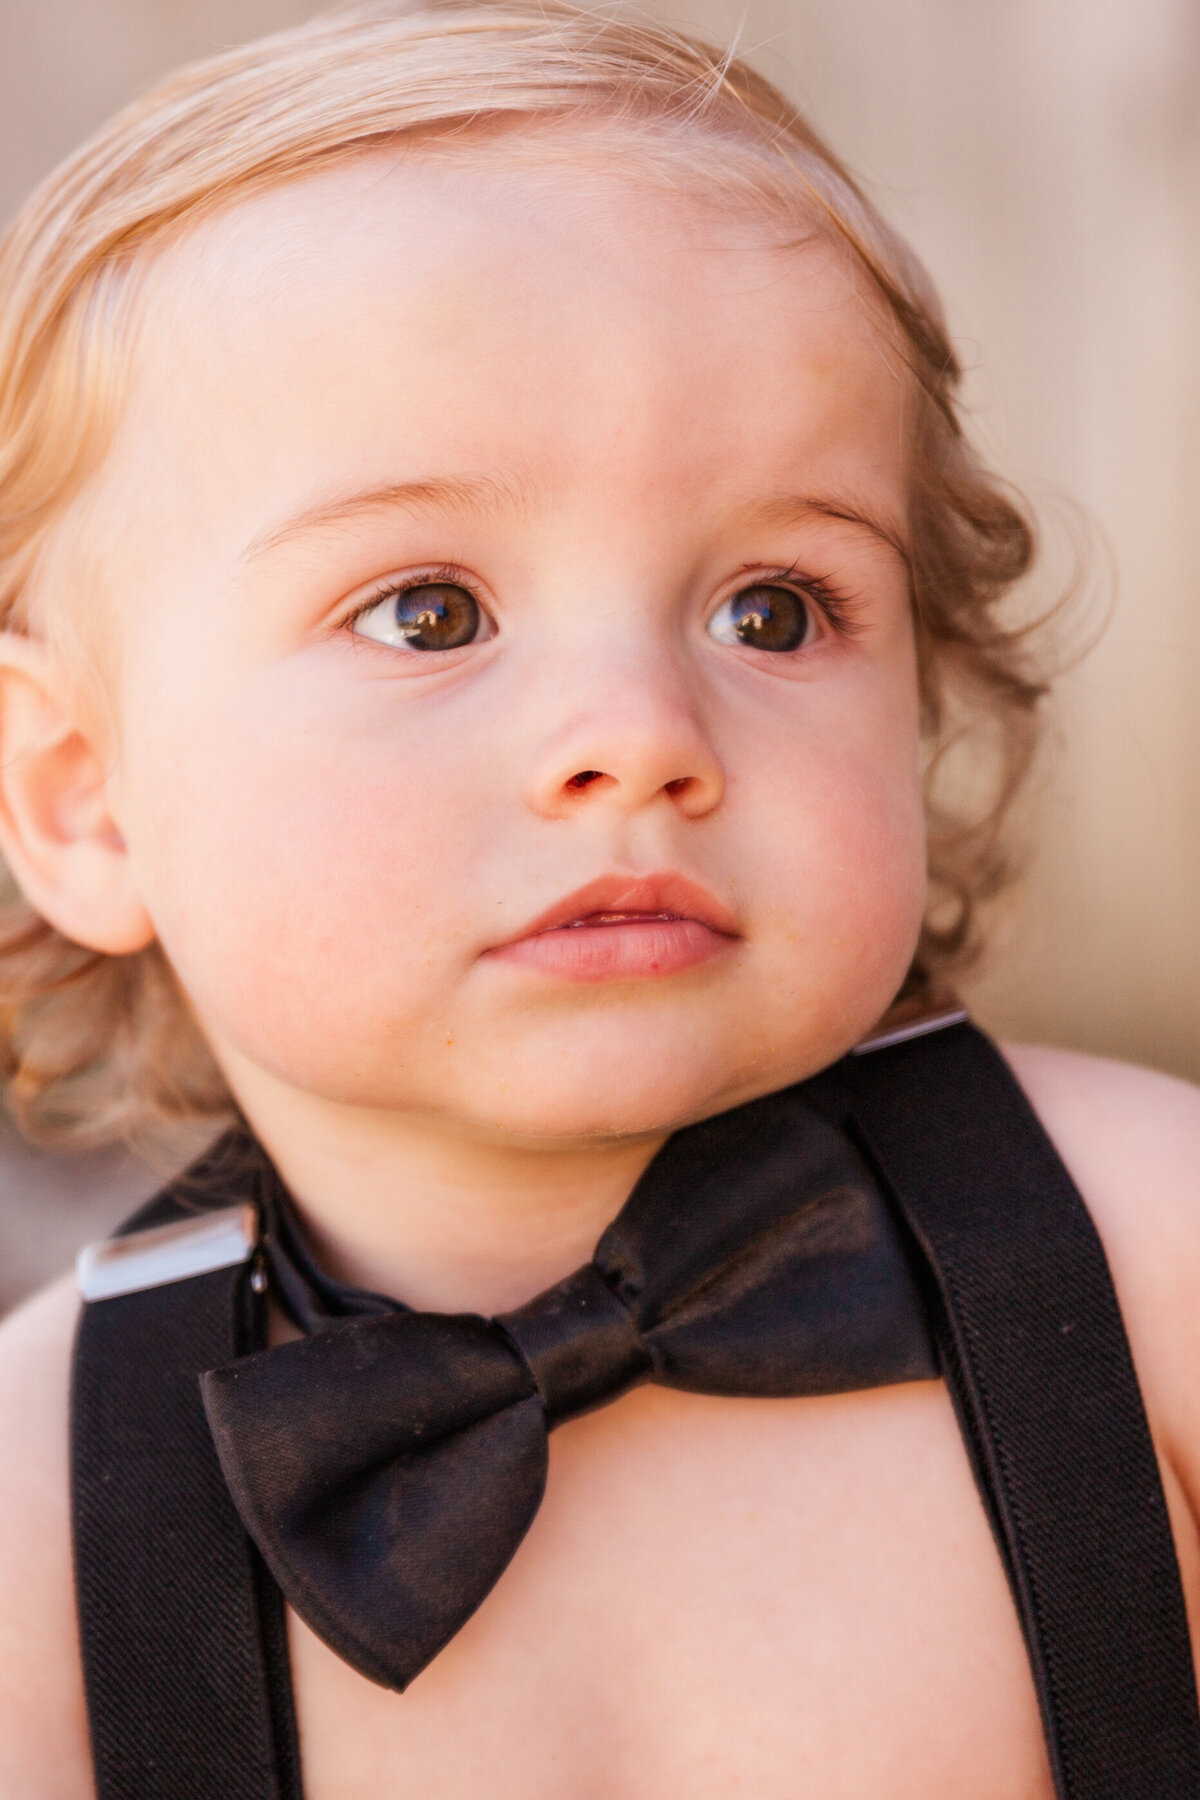 baby wears a black bow tie